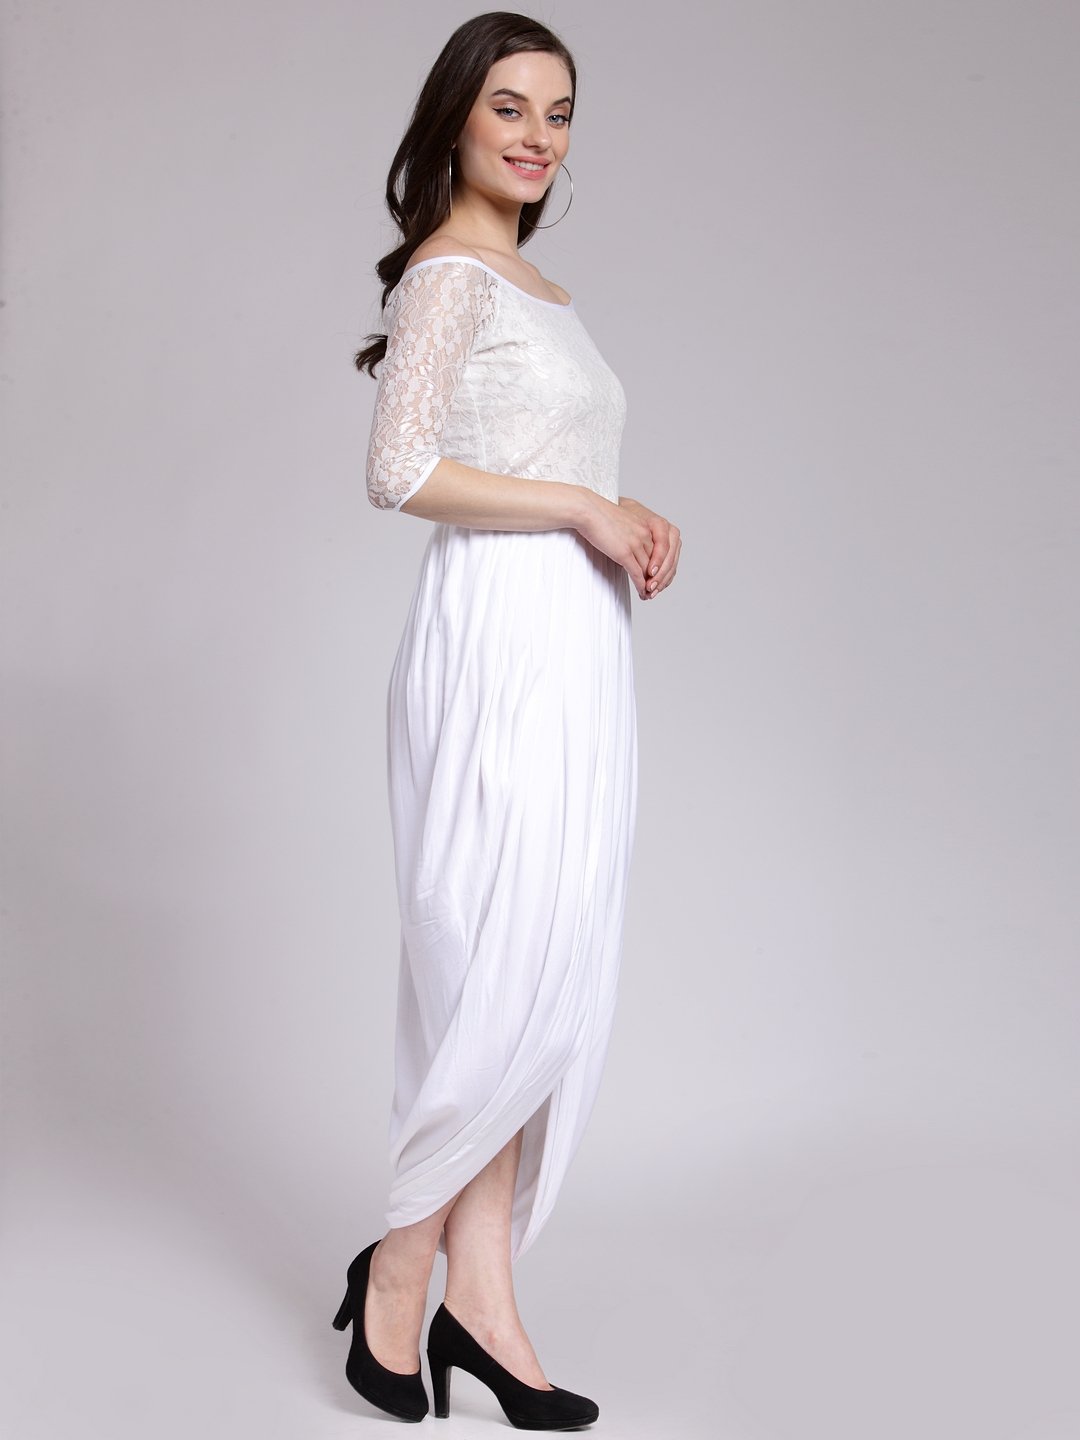 White Lace  Dress